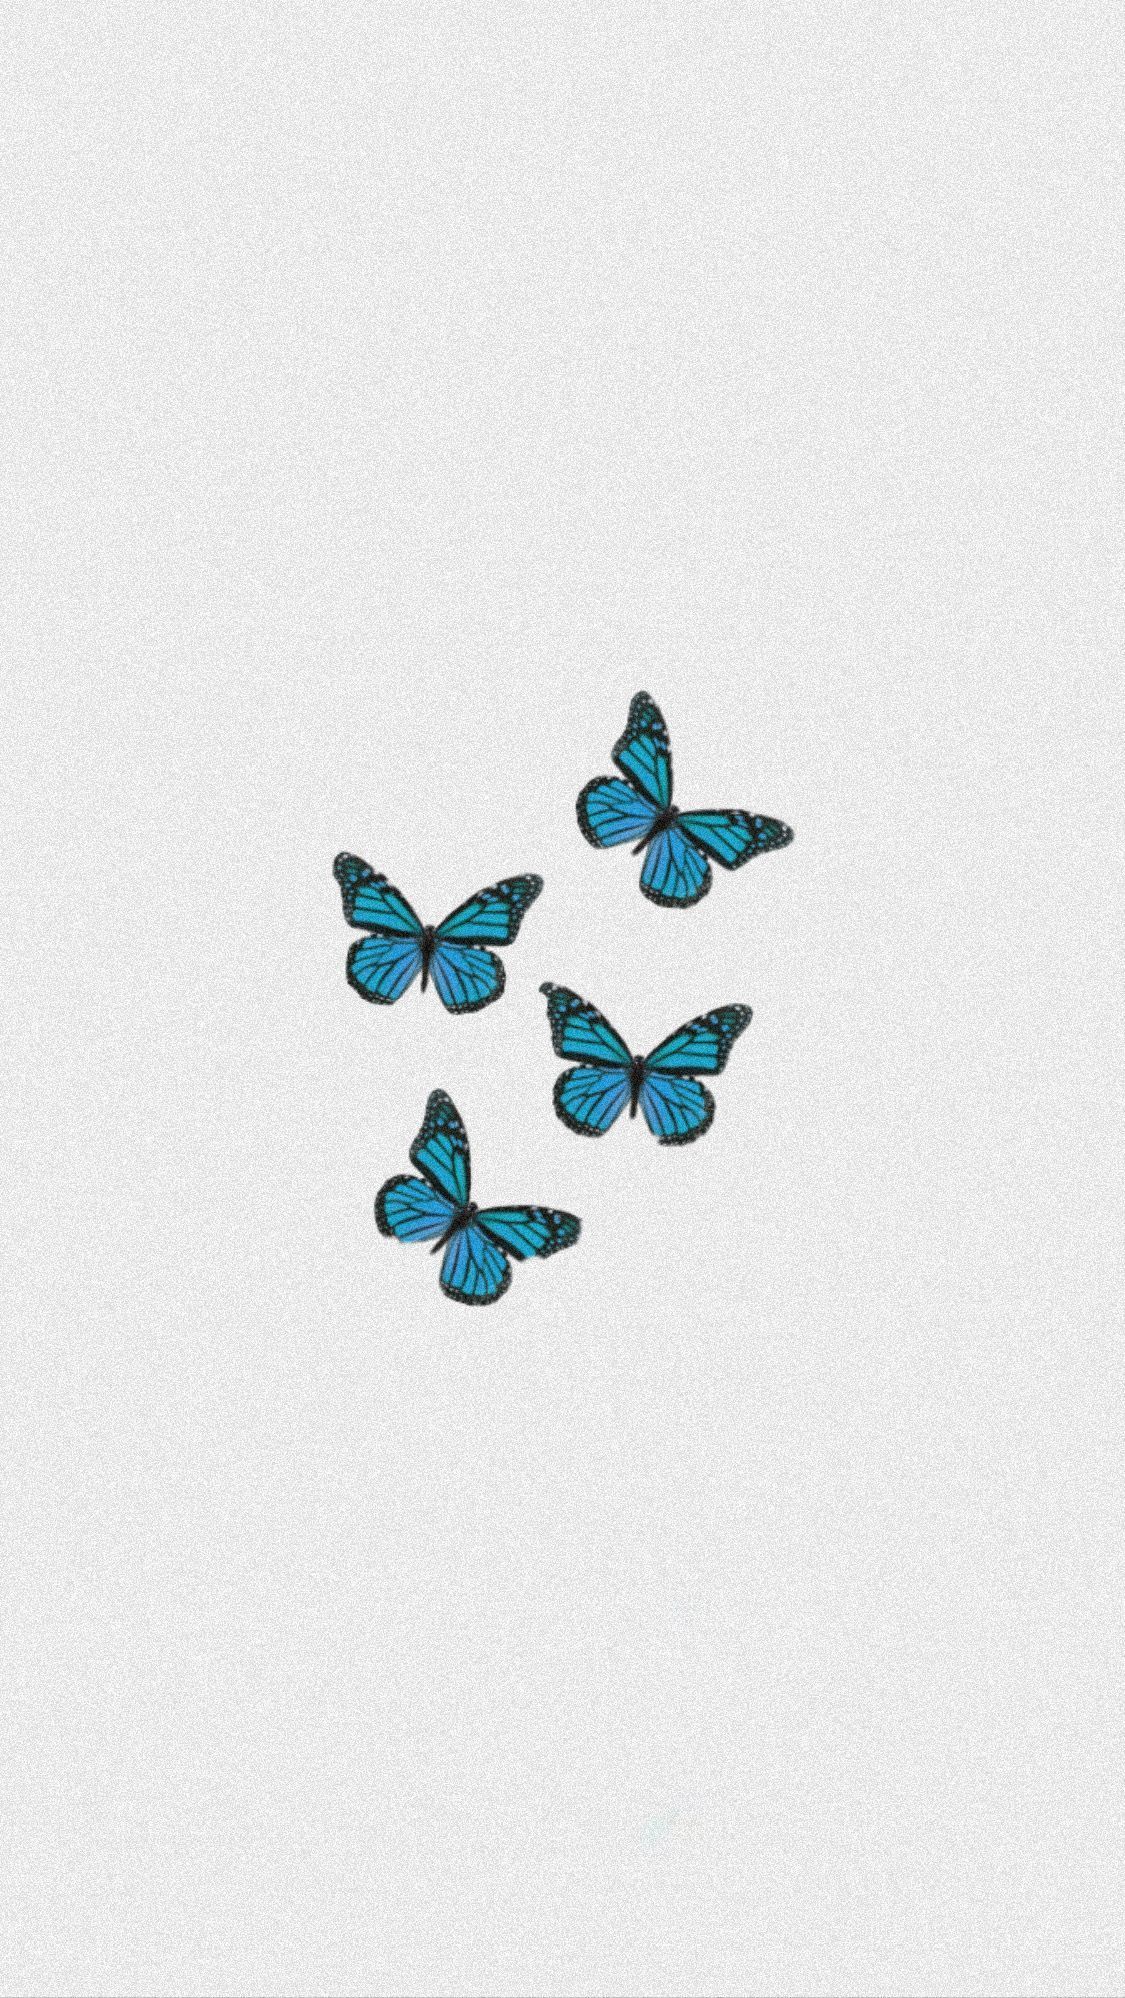 iphone wallpaper pattern #hintergrundbildiphone #tapete #butterfly